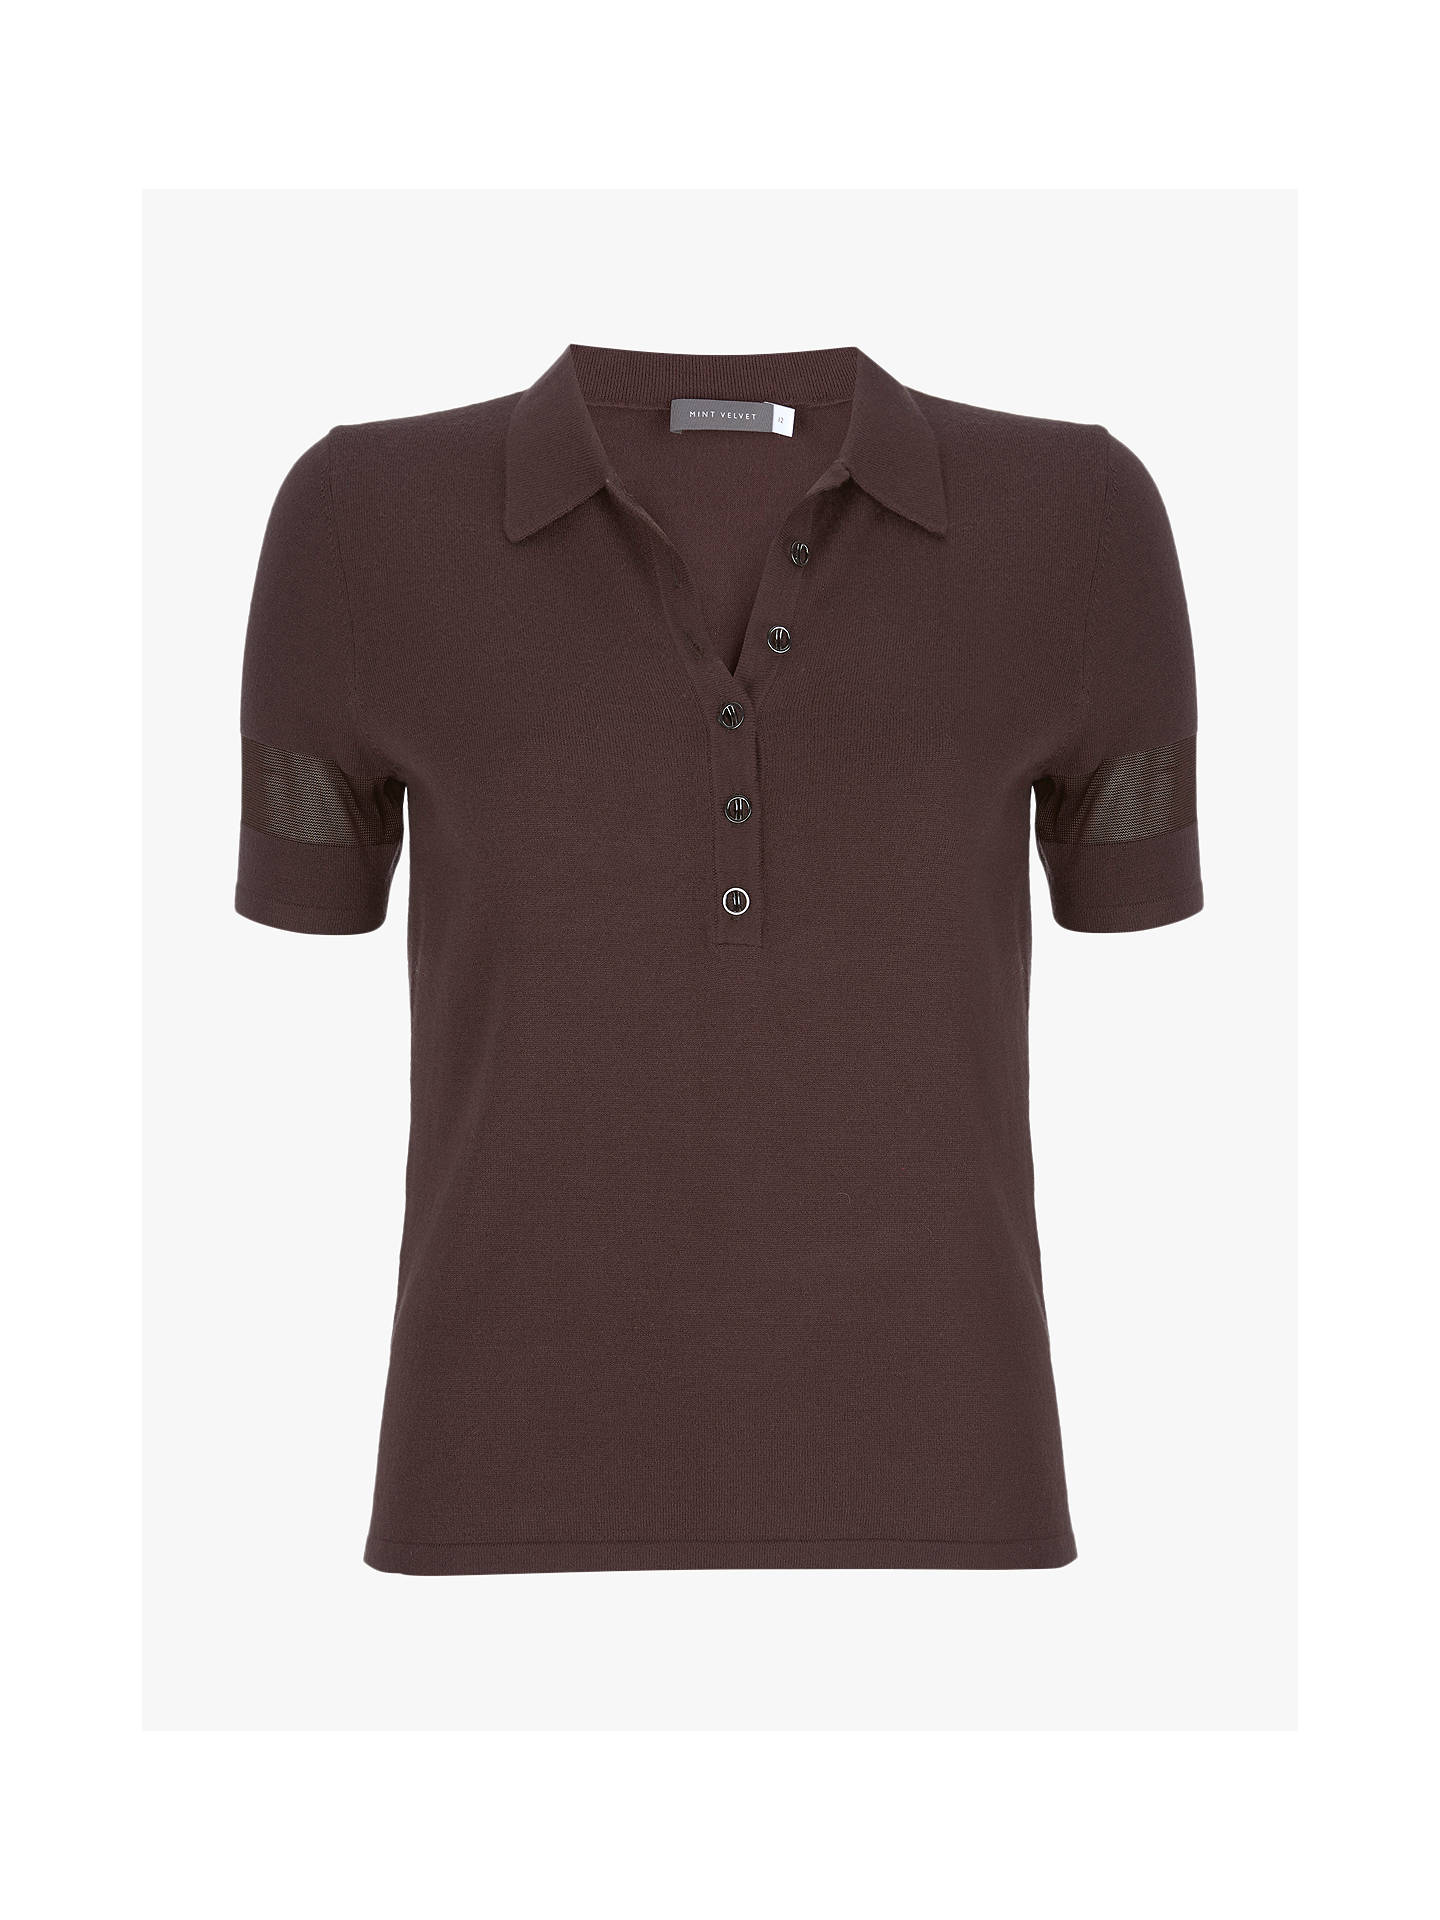 Mint Velvet Knitted Polo Shirt, Brown at John Lewis & Partners